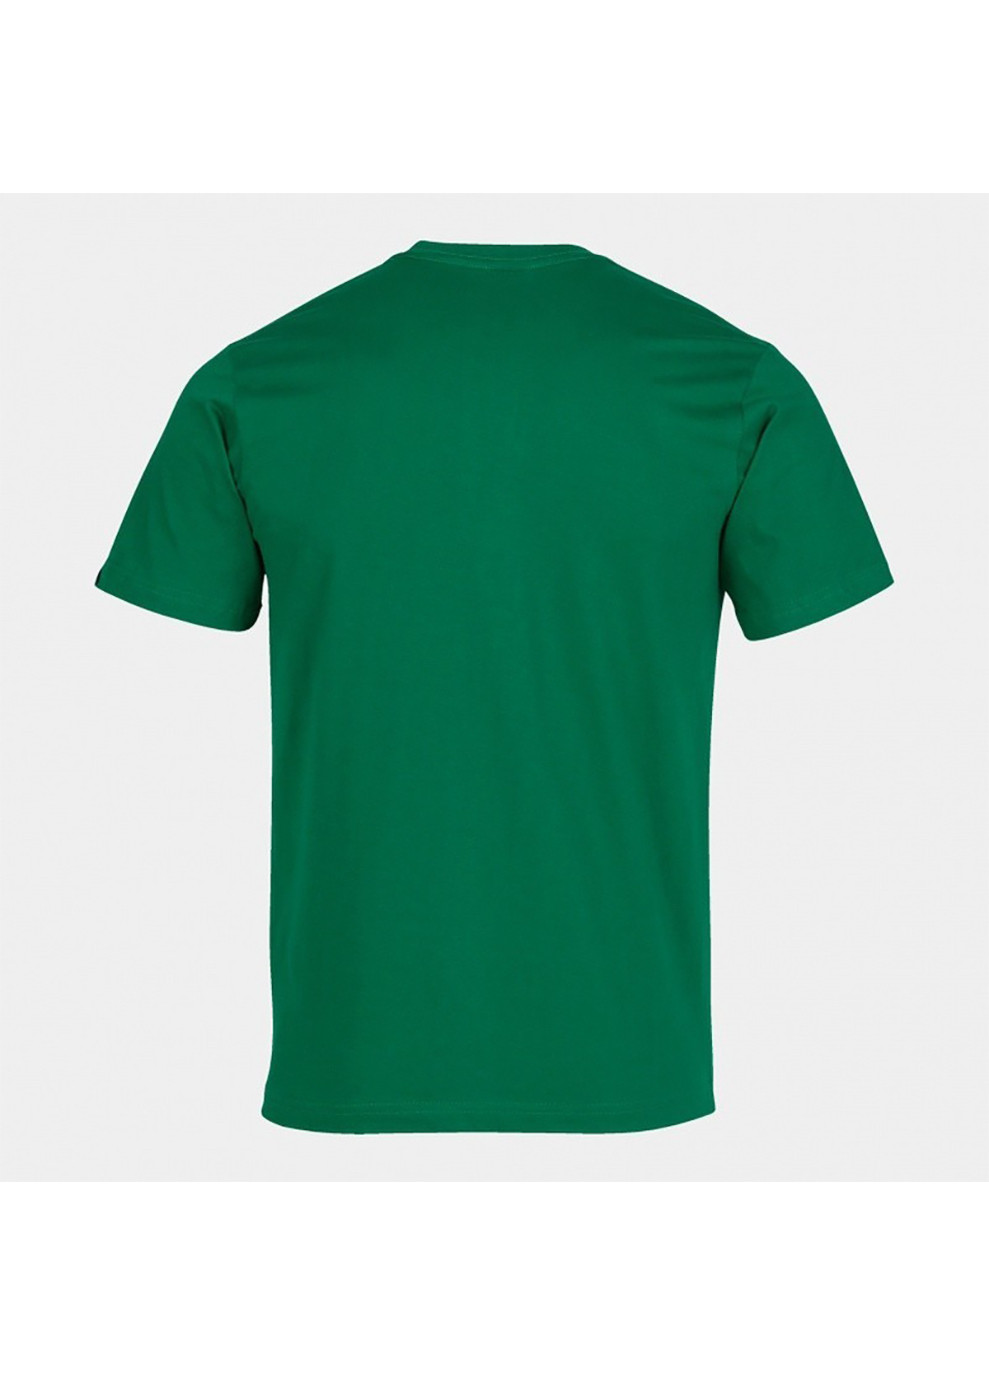 Зеленая футболка desert short sleeve t-shirt зеленый Joma